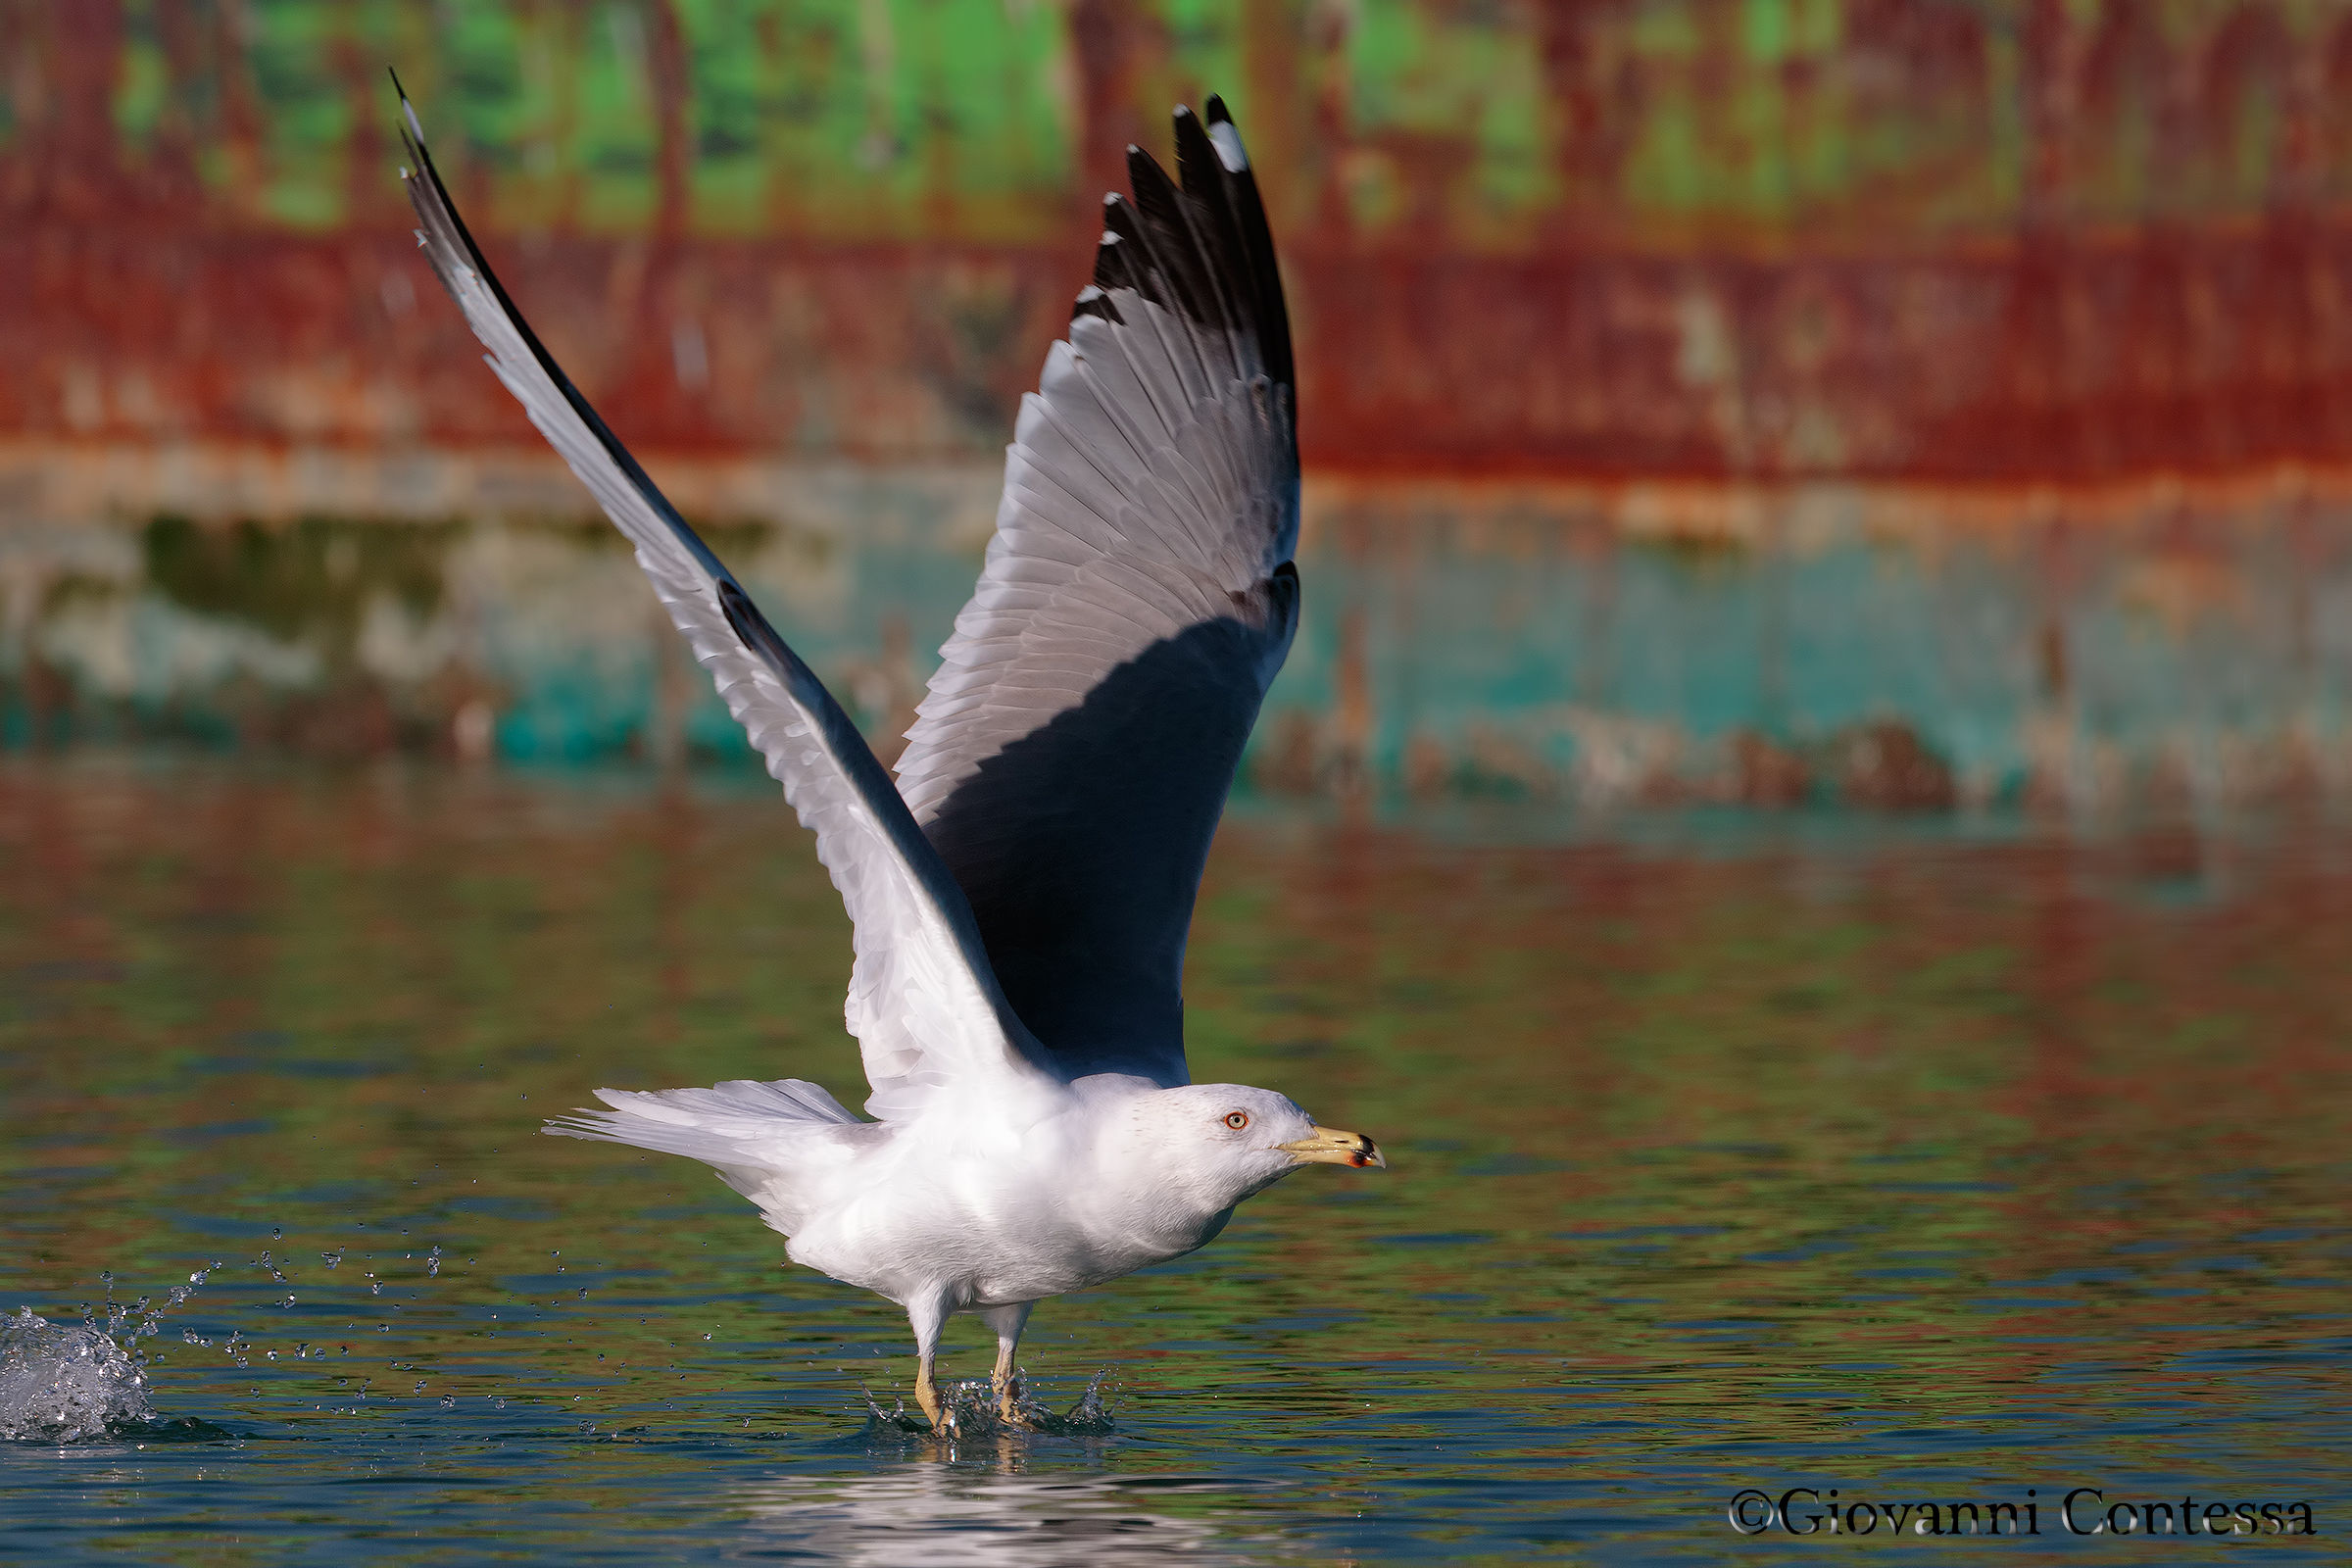 seagull in "takeoff"...